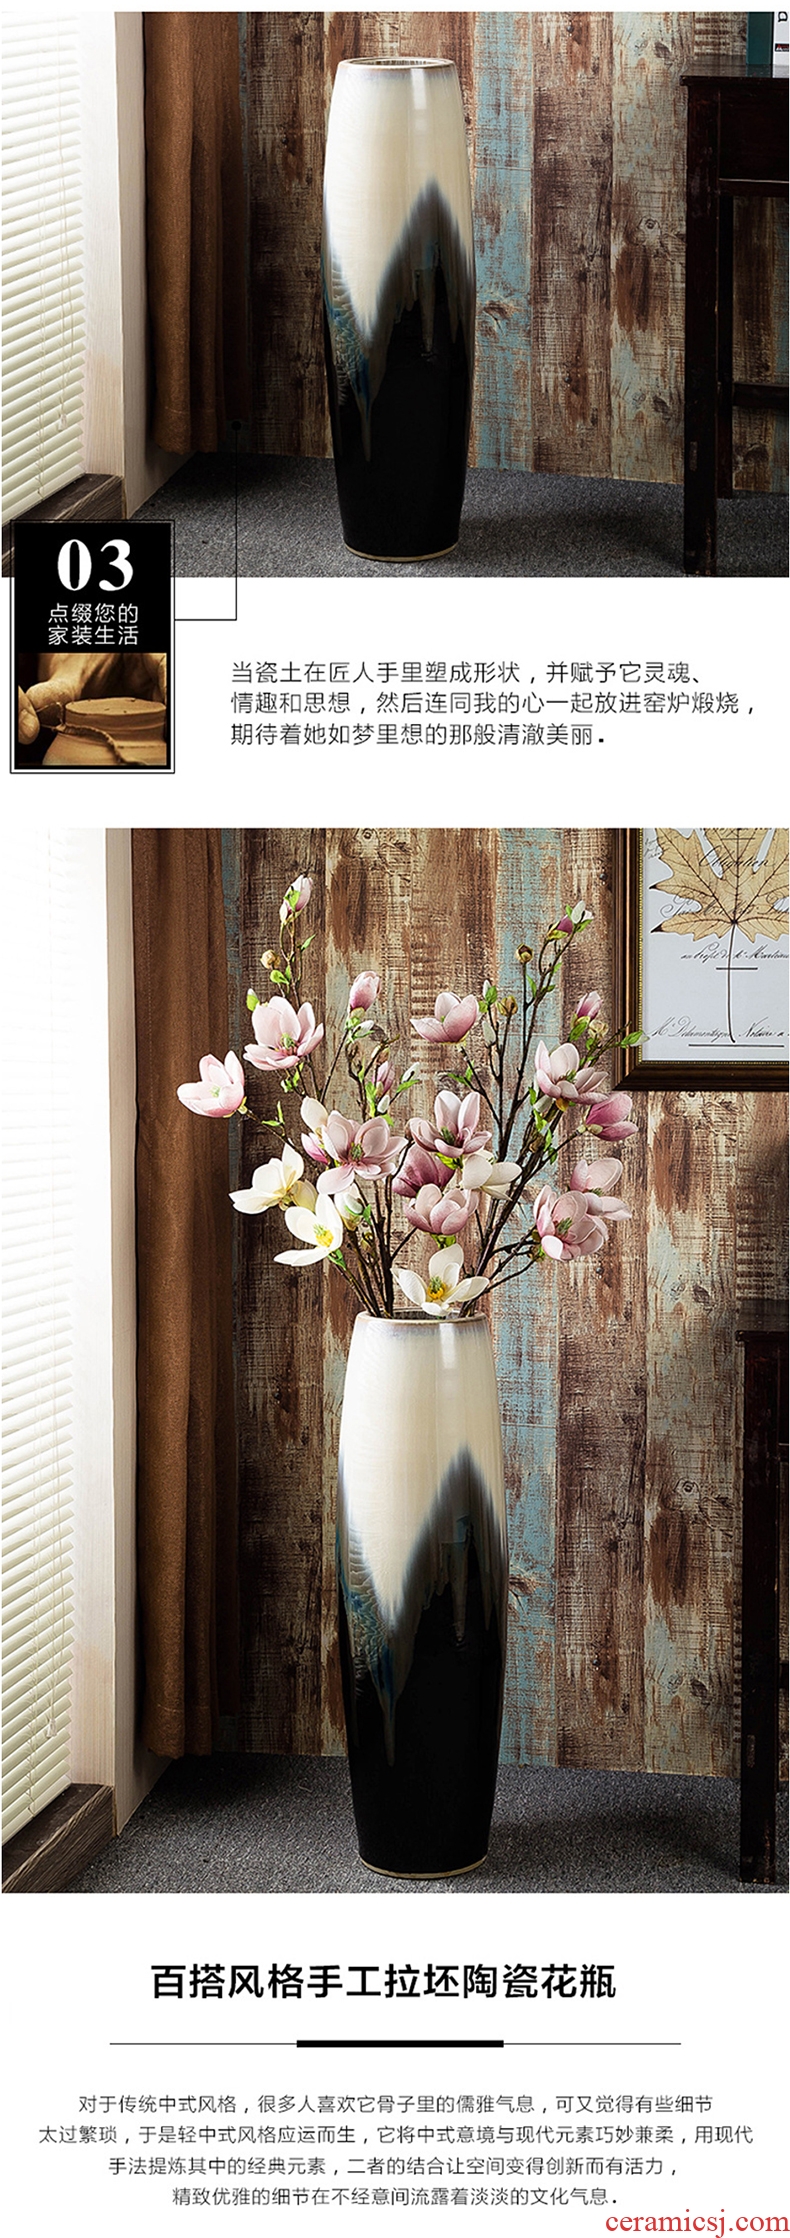 Jingdezhen chinaware bottle of Chinese red Mosaic gold peony flowers prosperous landing big vase hotel sitting room place - 597888230667